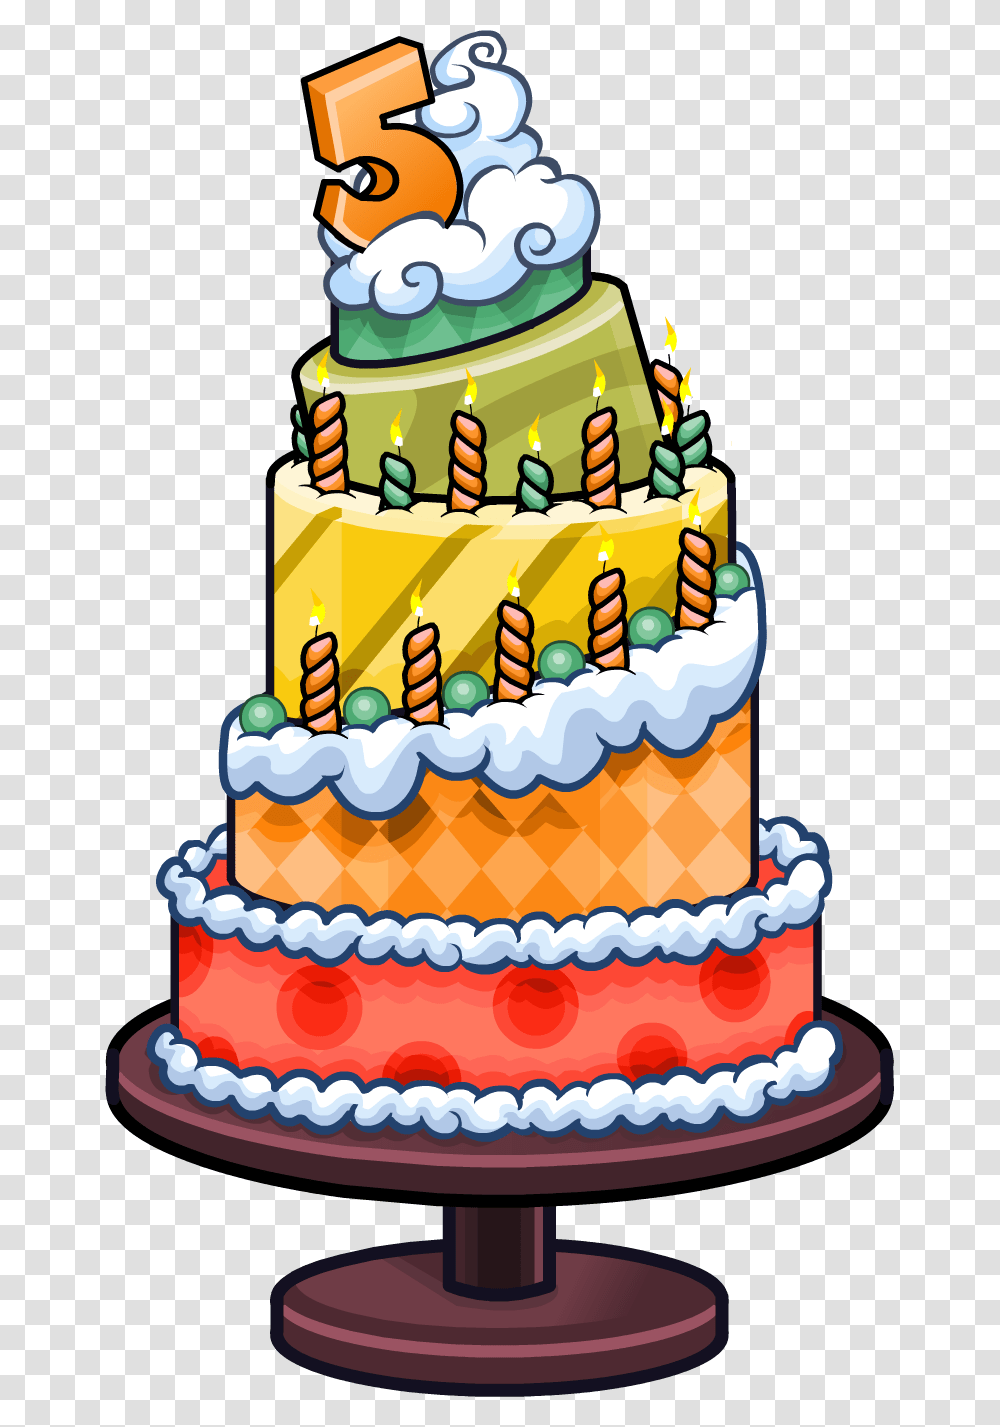 5th Anniversary Party Cake Birthday Club Penguin, Dessert, Food, Birthday Cake Transparent Png